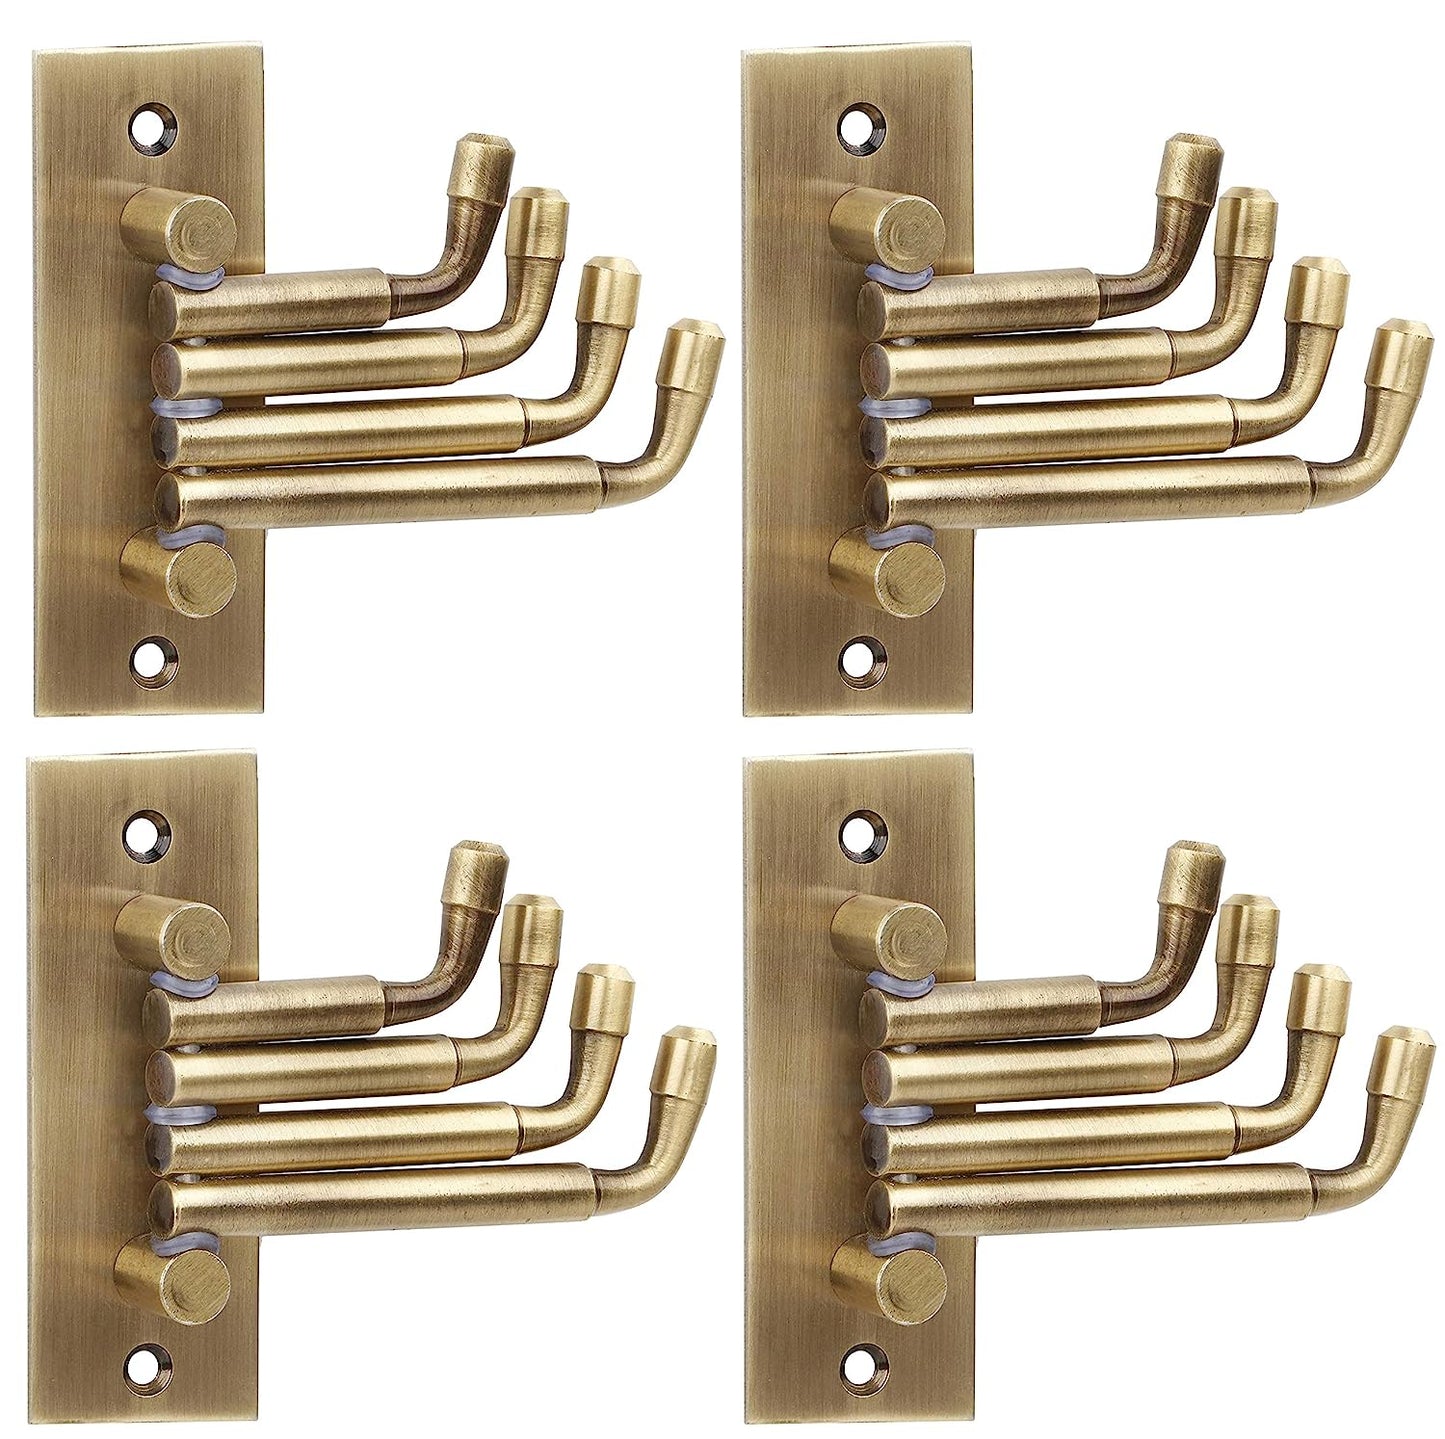 DOCOSS -Pack Of 2-Stainless Steel Flexible Hooks Antique Brass Bathroom Cloth Hanger Wall Hook Door Robe Hooks for Hanging Keys,Clothes,Towel Steel Hook